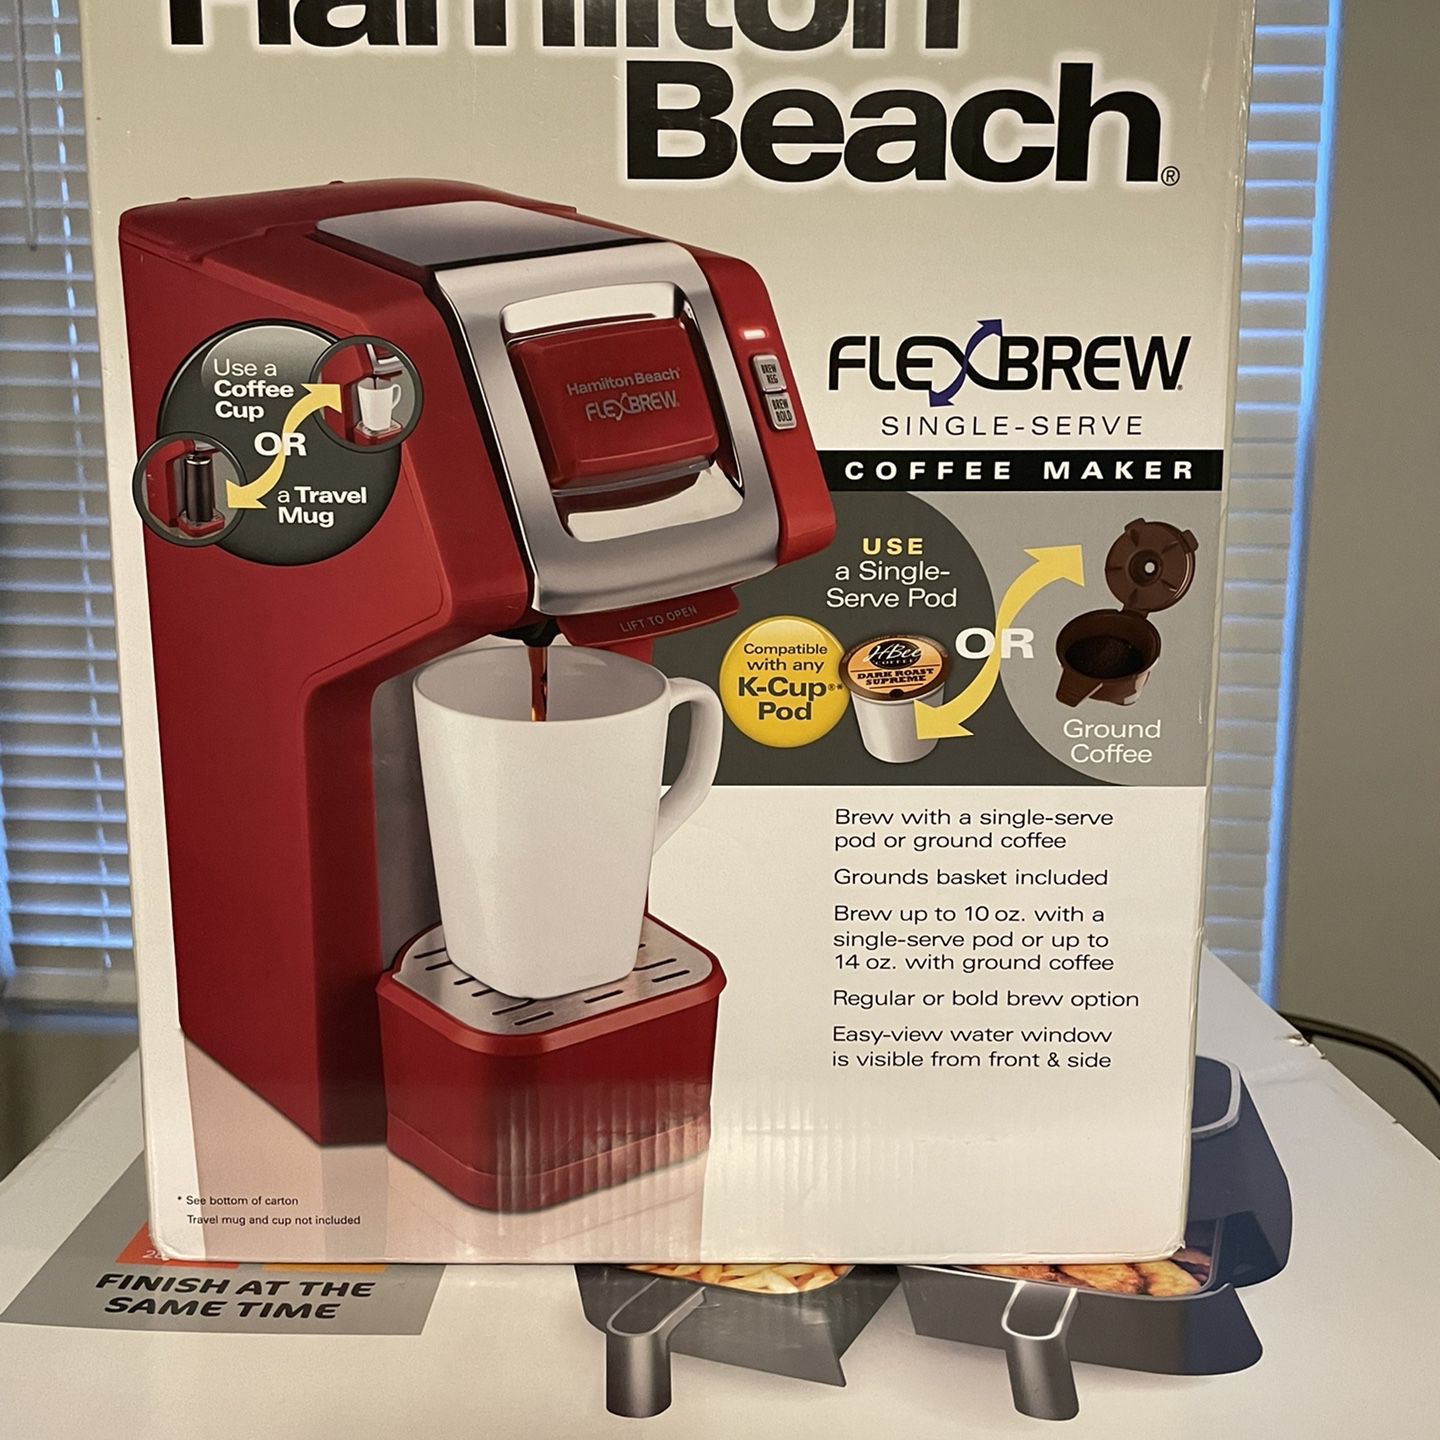 Hamilton Beach Flexbrew Single-serve Coffee Maker